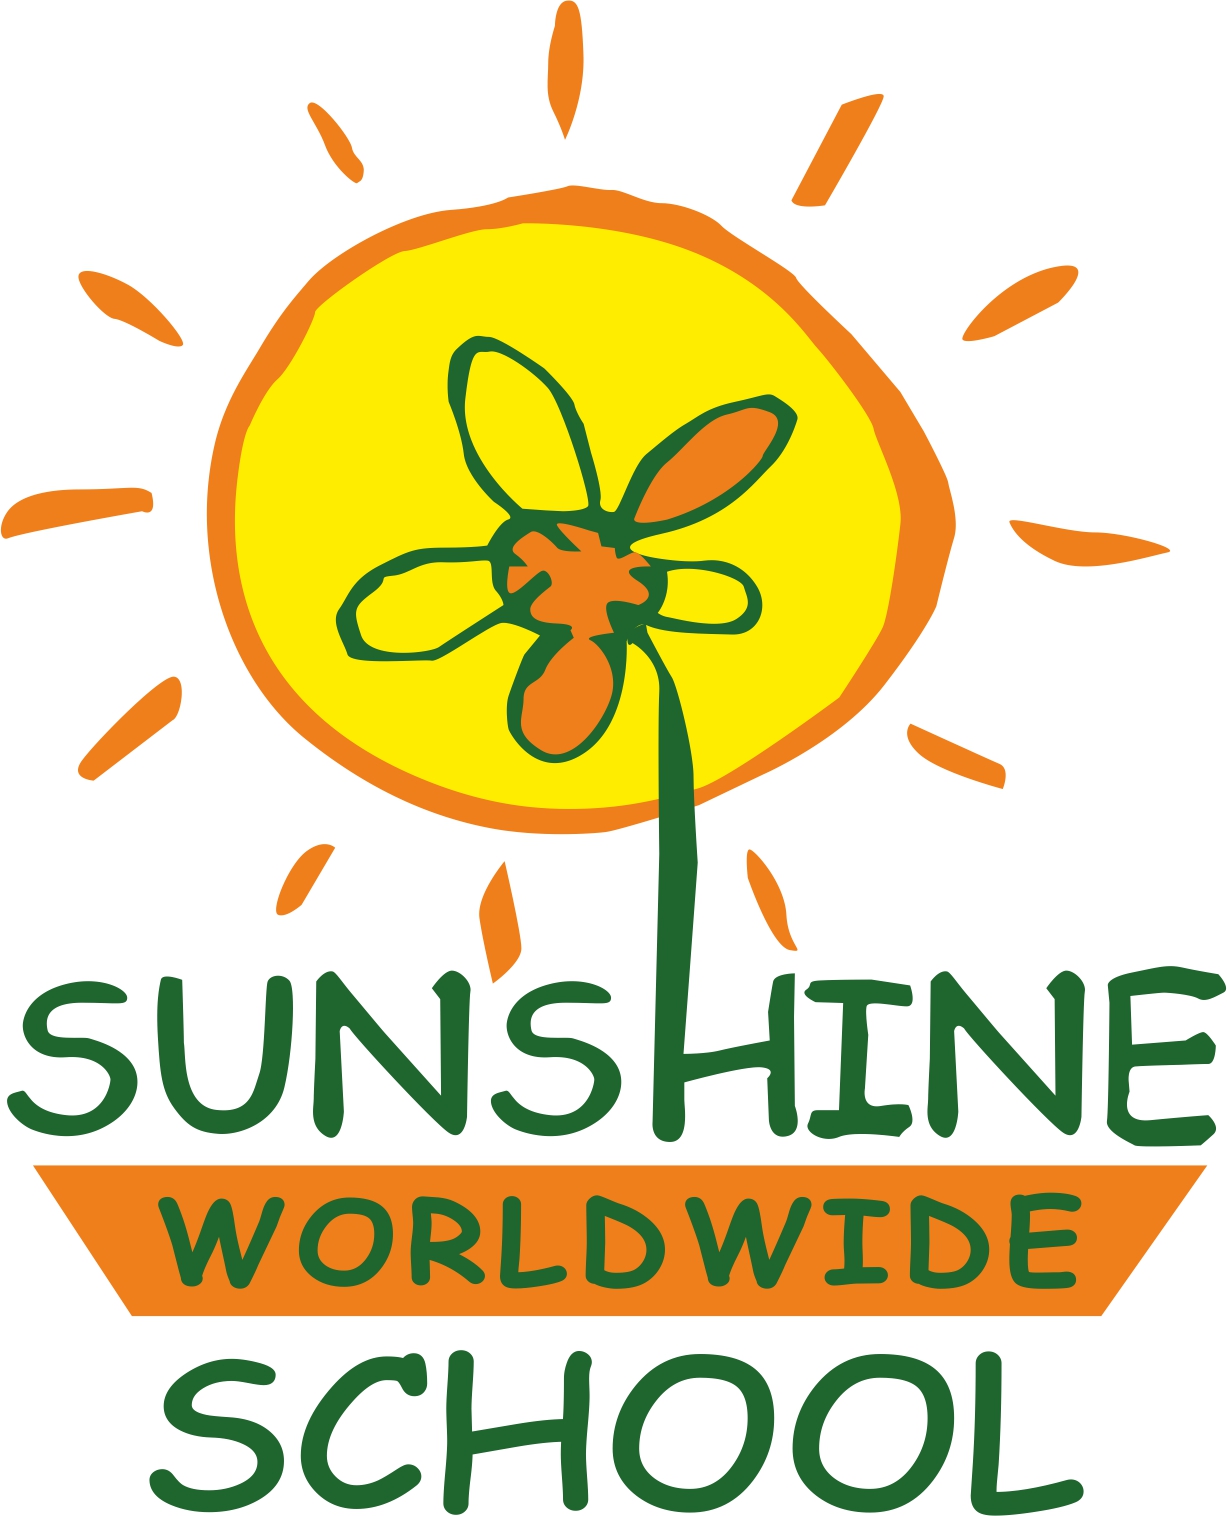 Sunshine Worldwide School|Schools|Education